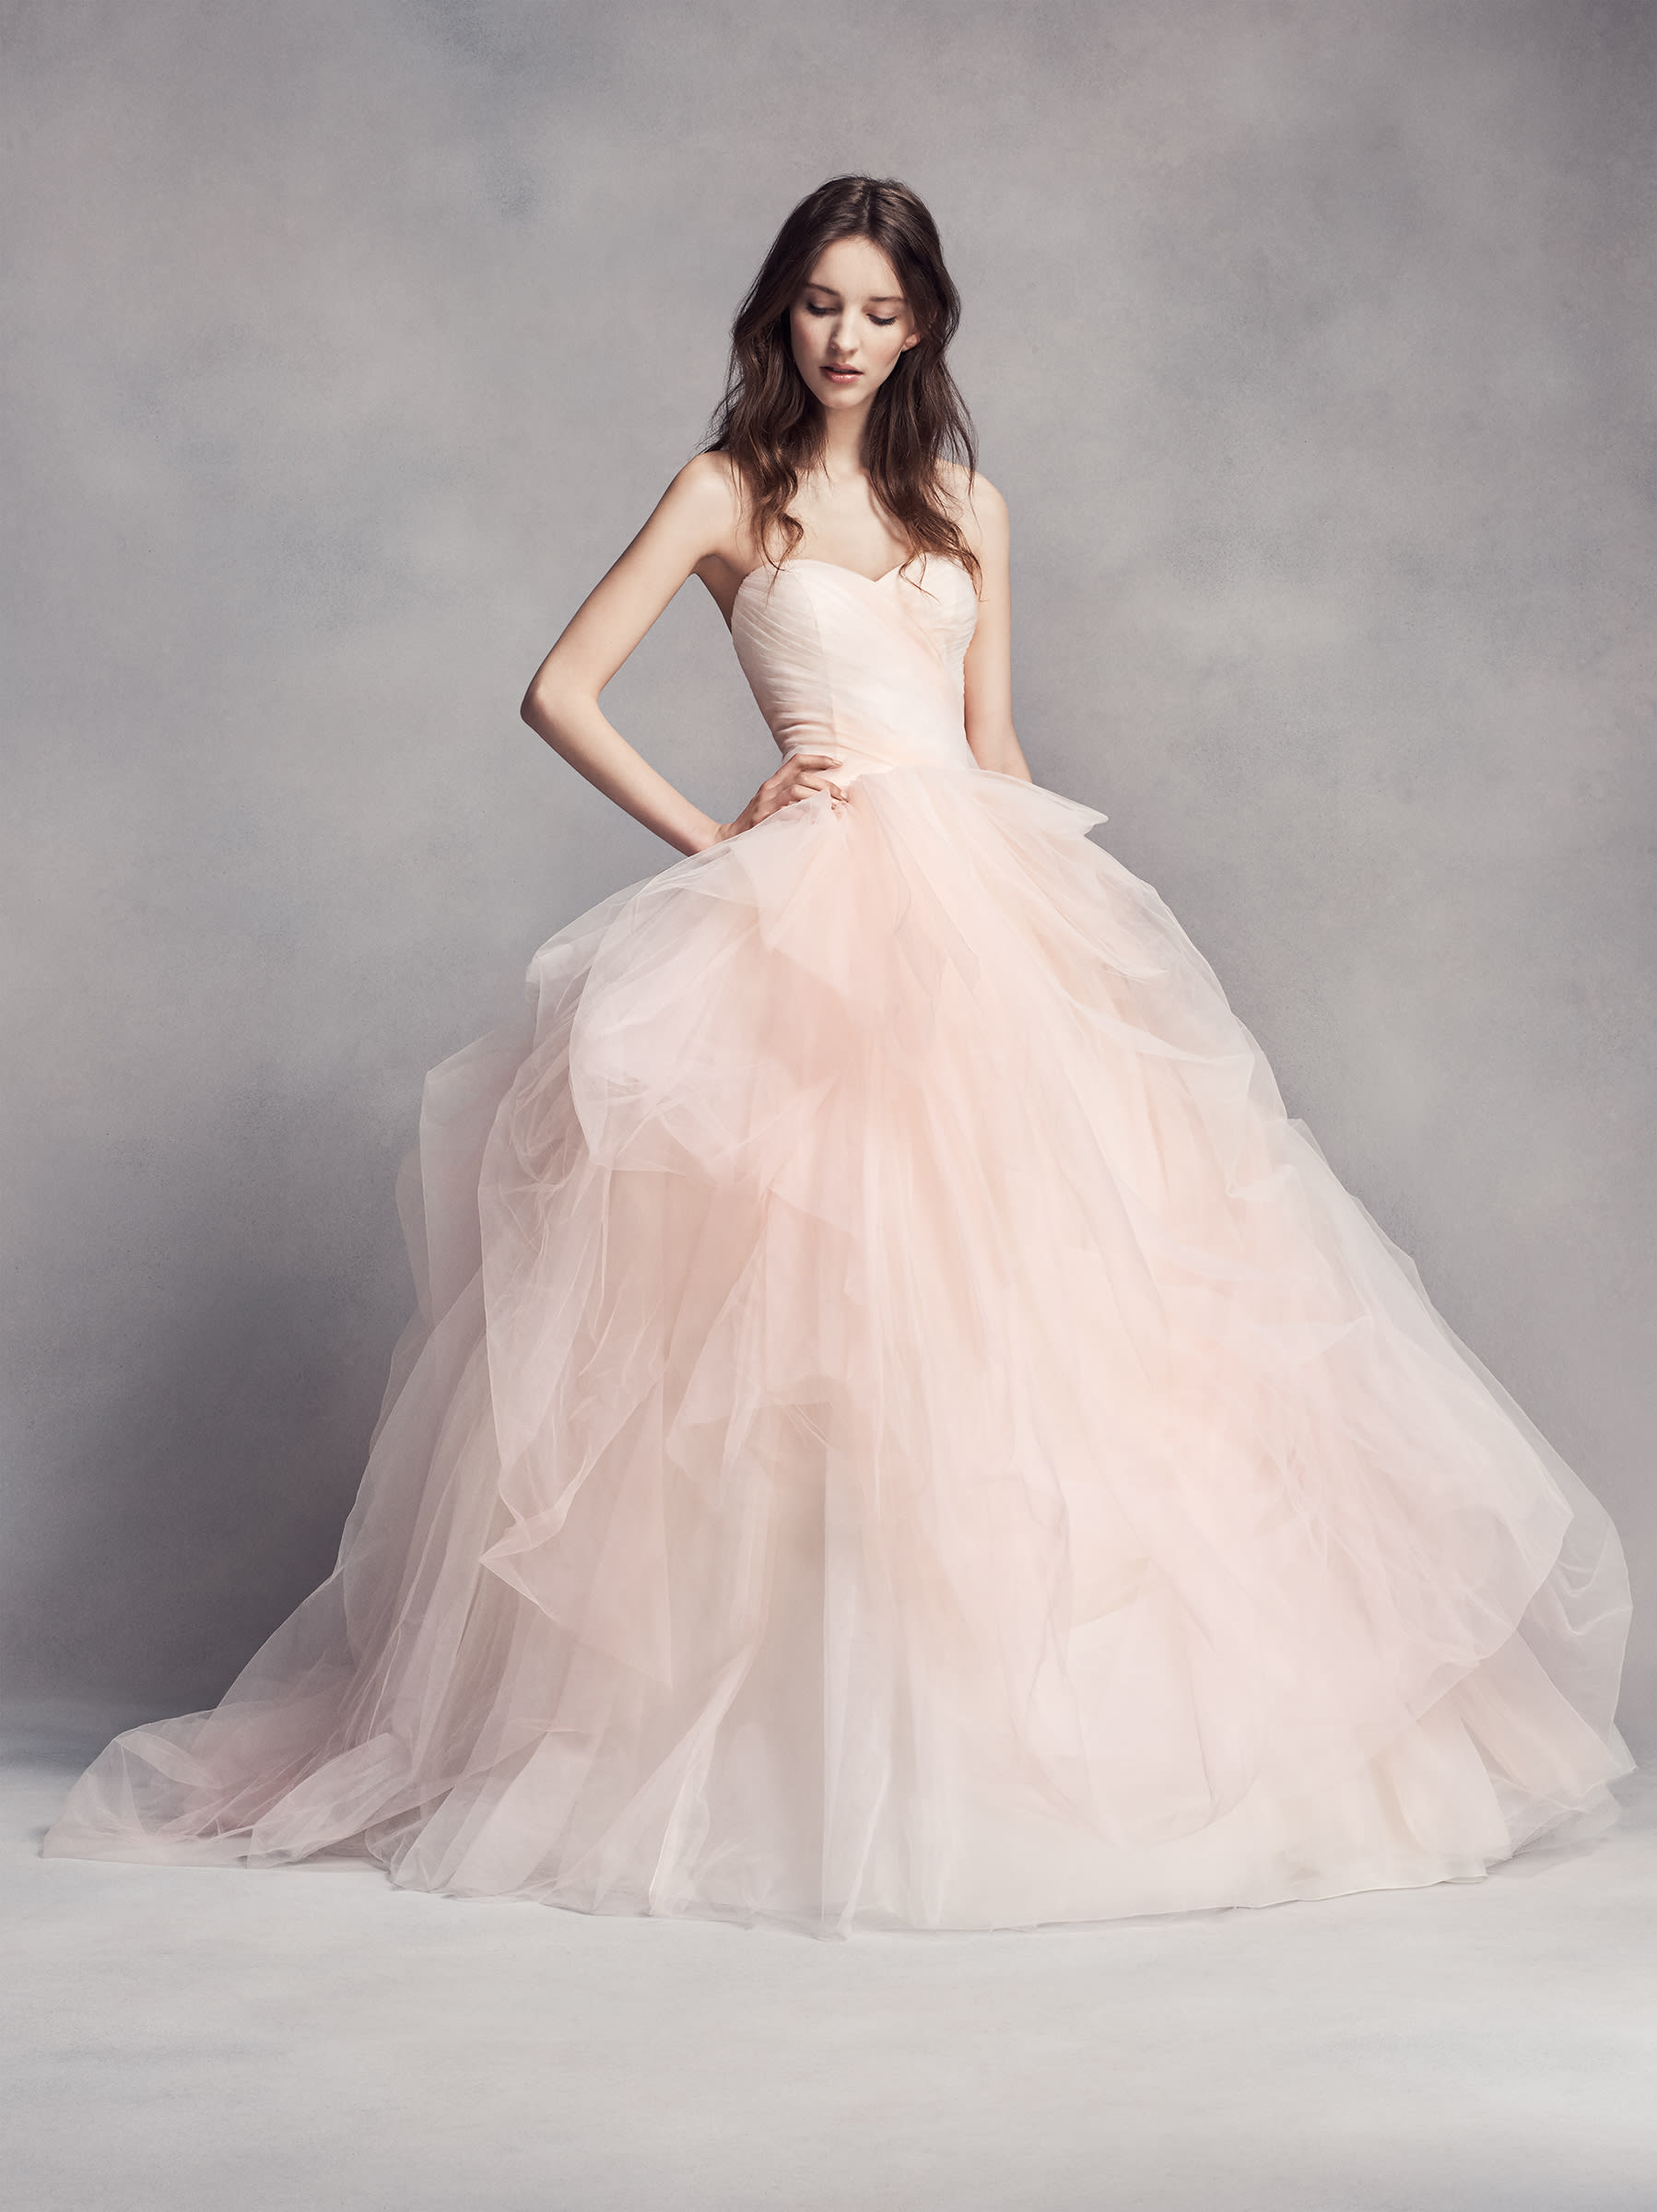 Bridebook.co.uk David's Bridal pink ballgown dress